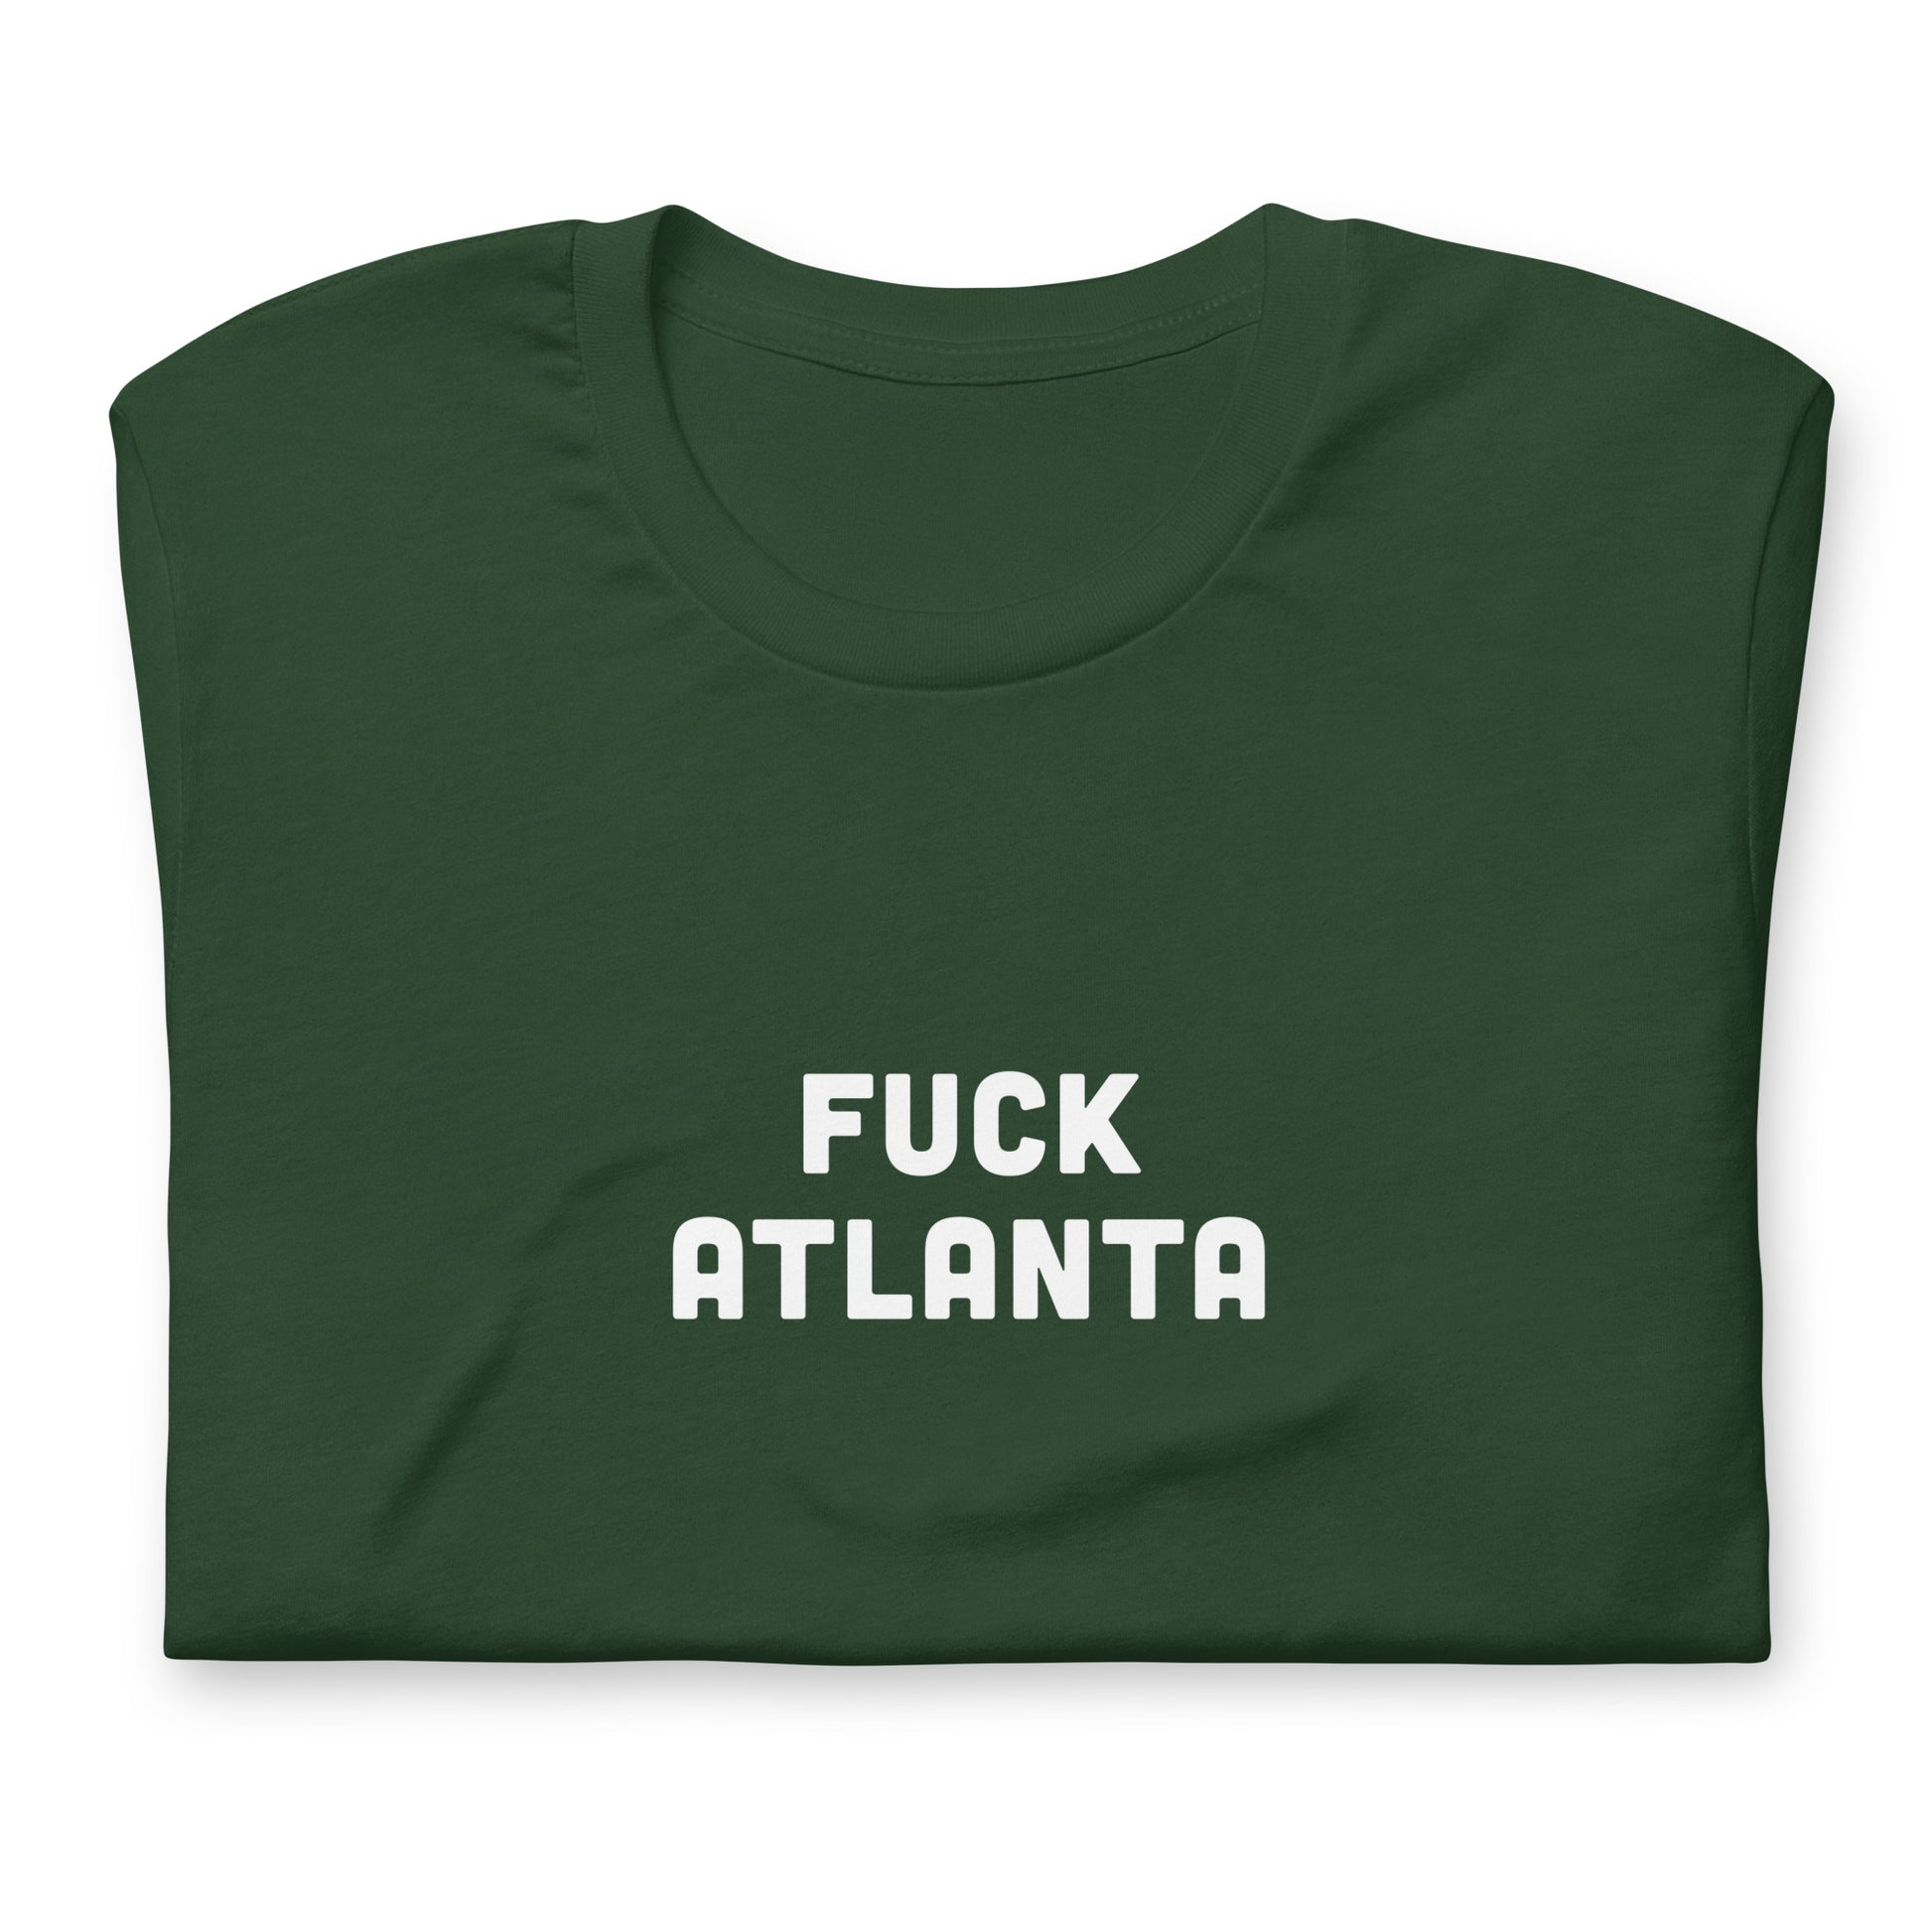 Fuck Atlanta T-Shirt Size M Color Navy